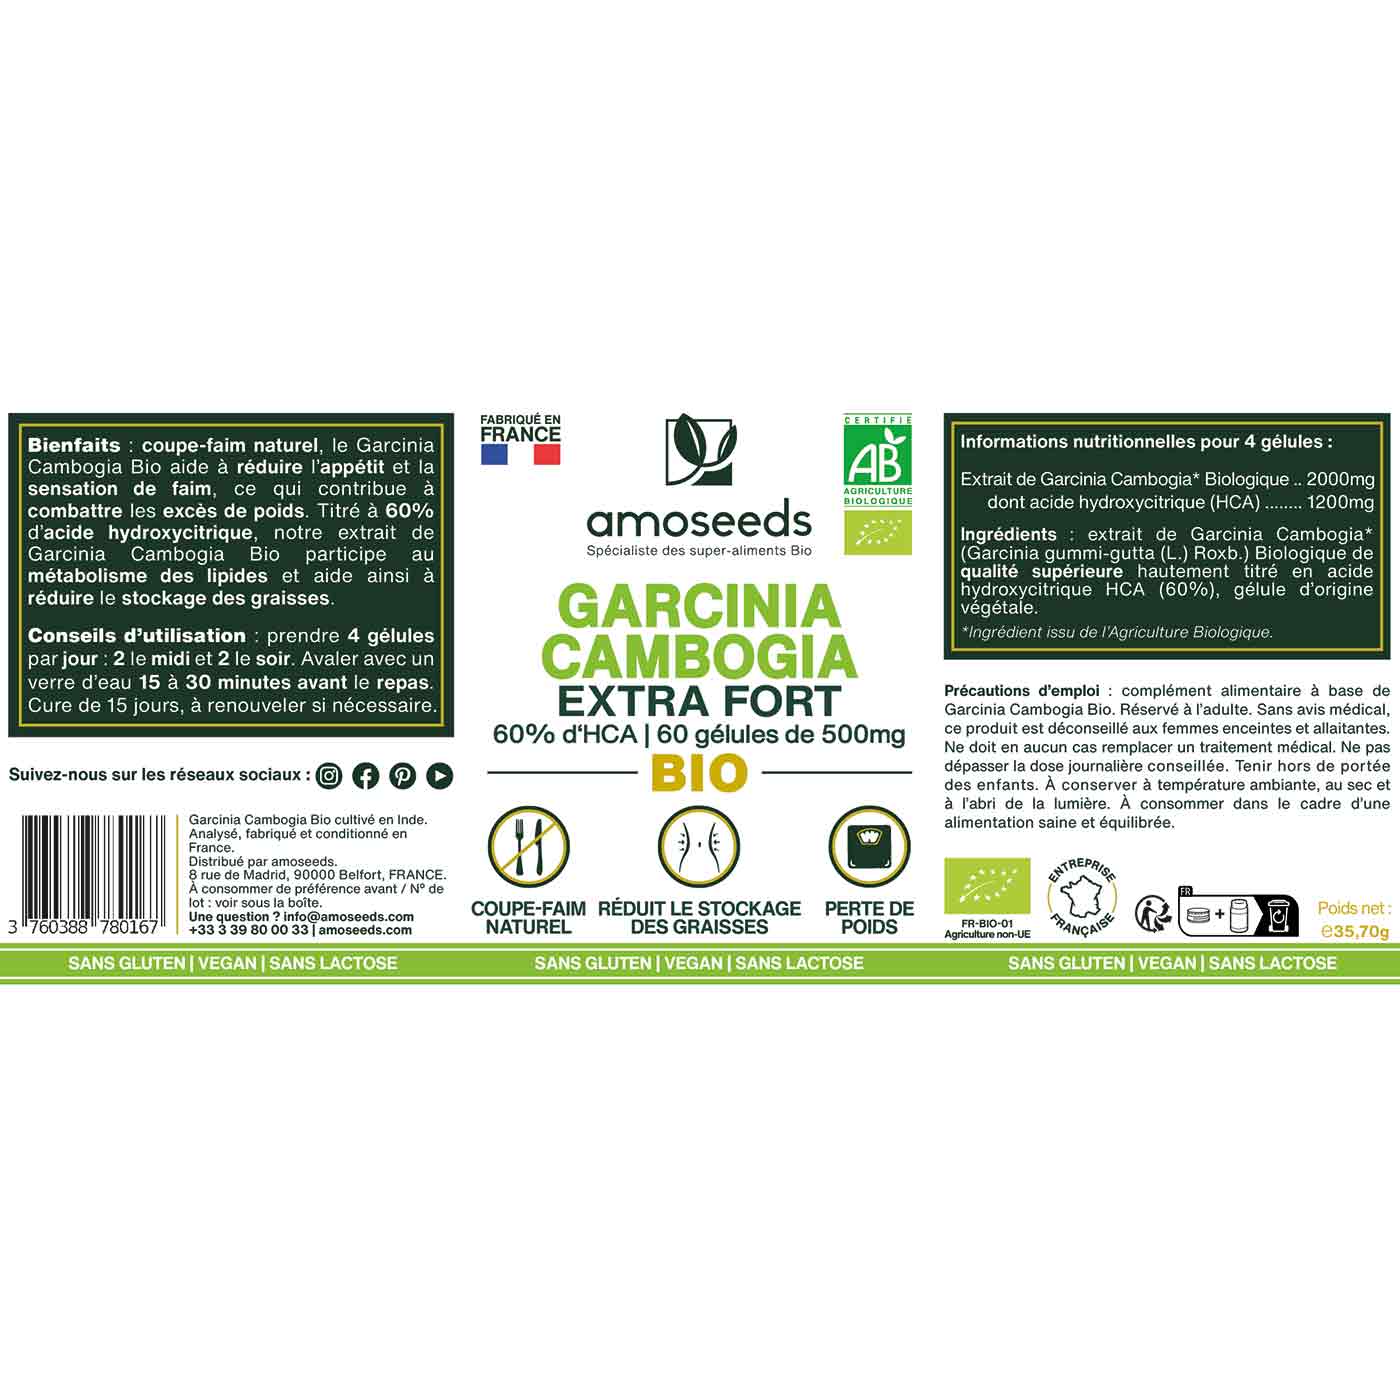 Garcinia Cambogia bio gelules amoseeds specialiste des super aliments bio